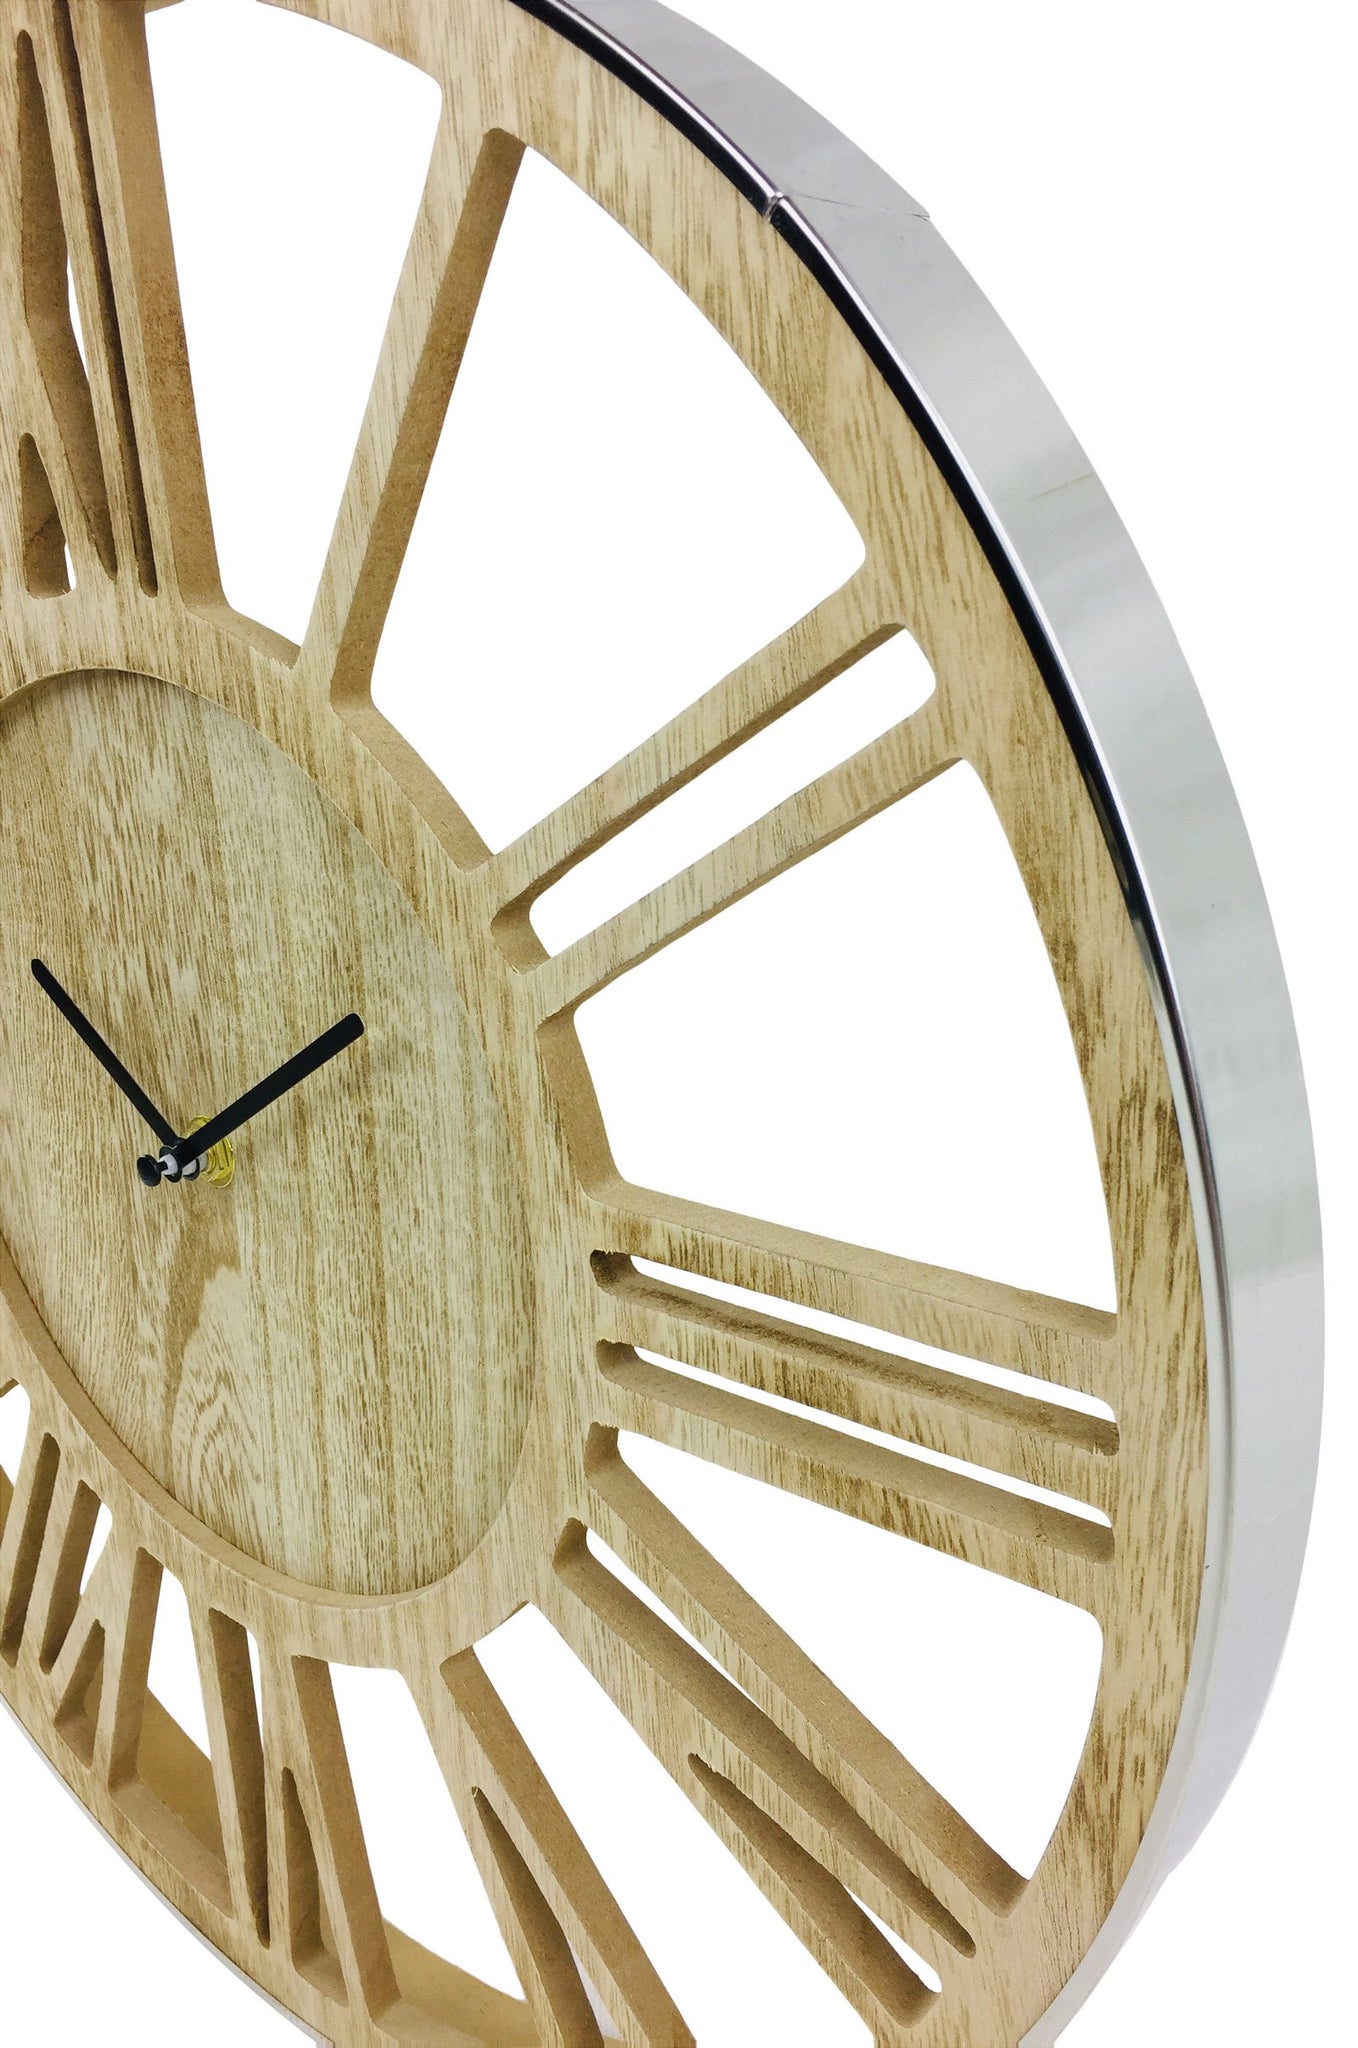 Wooden Silver Clock 40cm